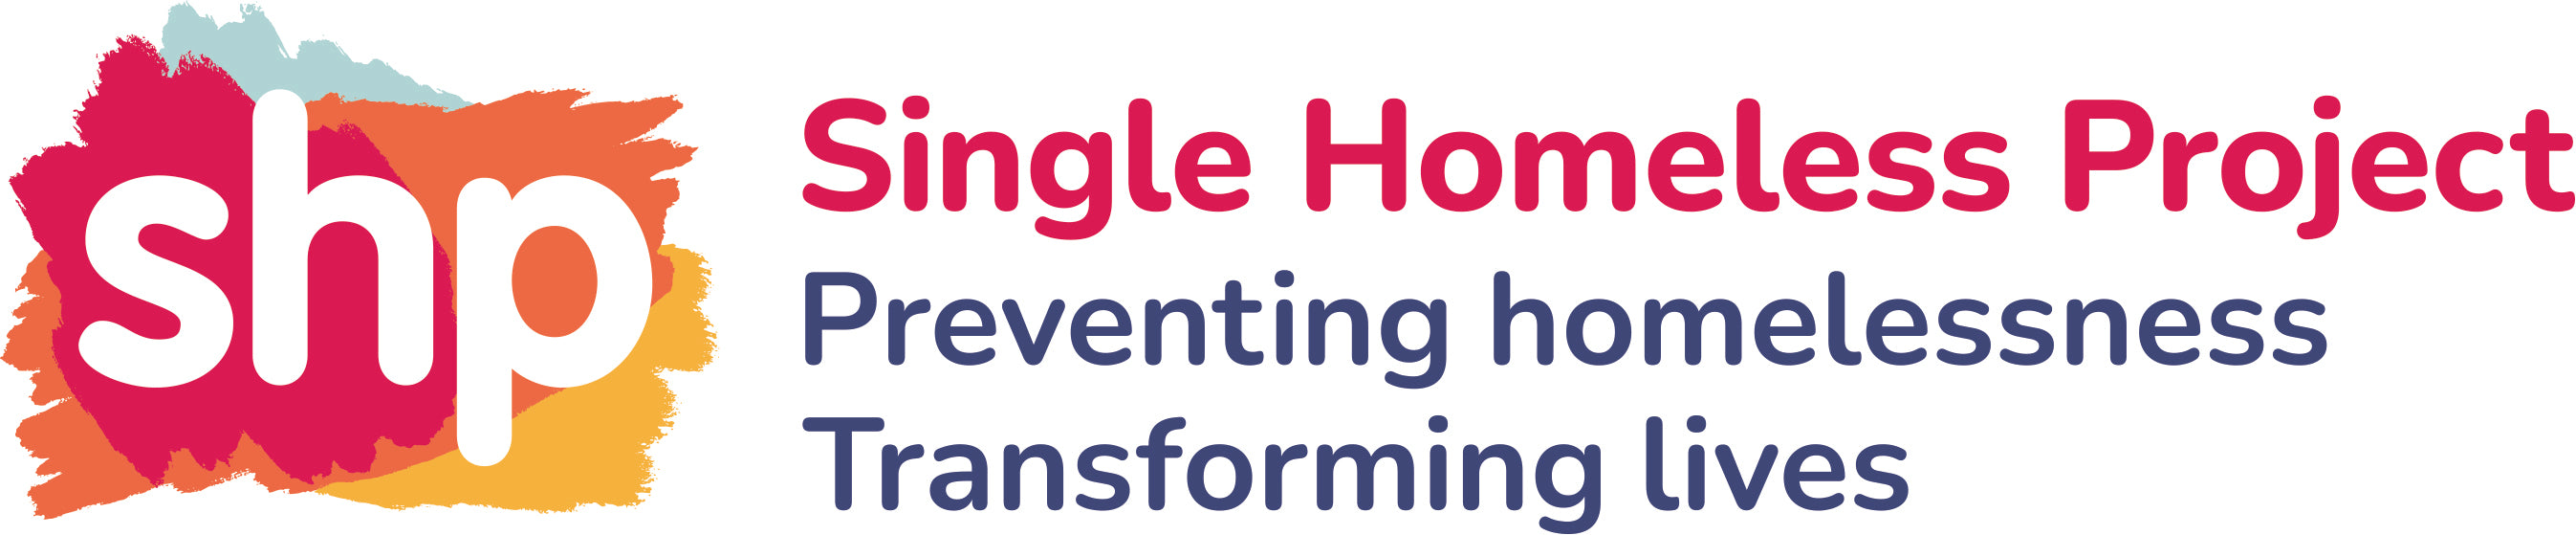 SHP Single Homeless Project Preventing homelessness Transforming lives Logo